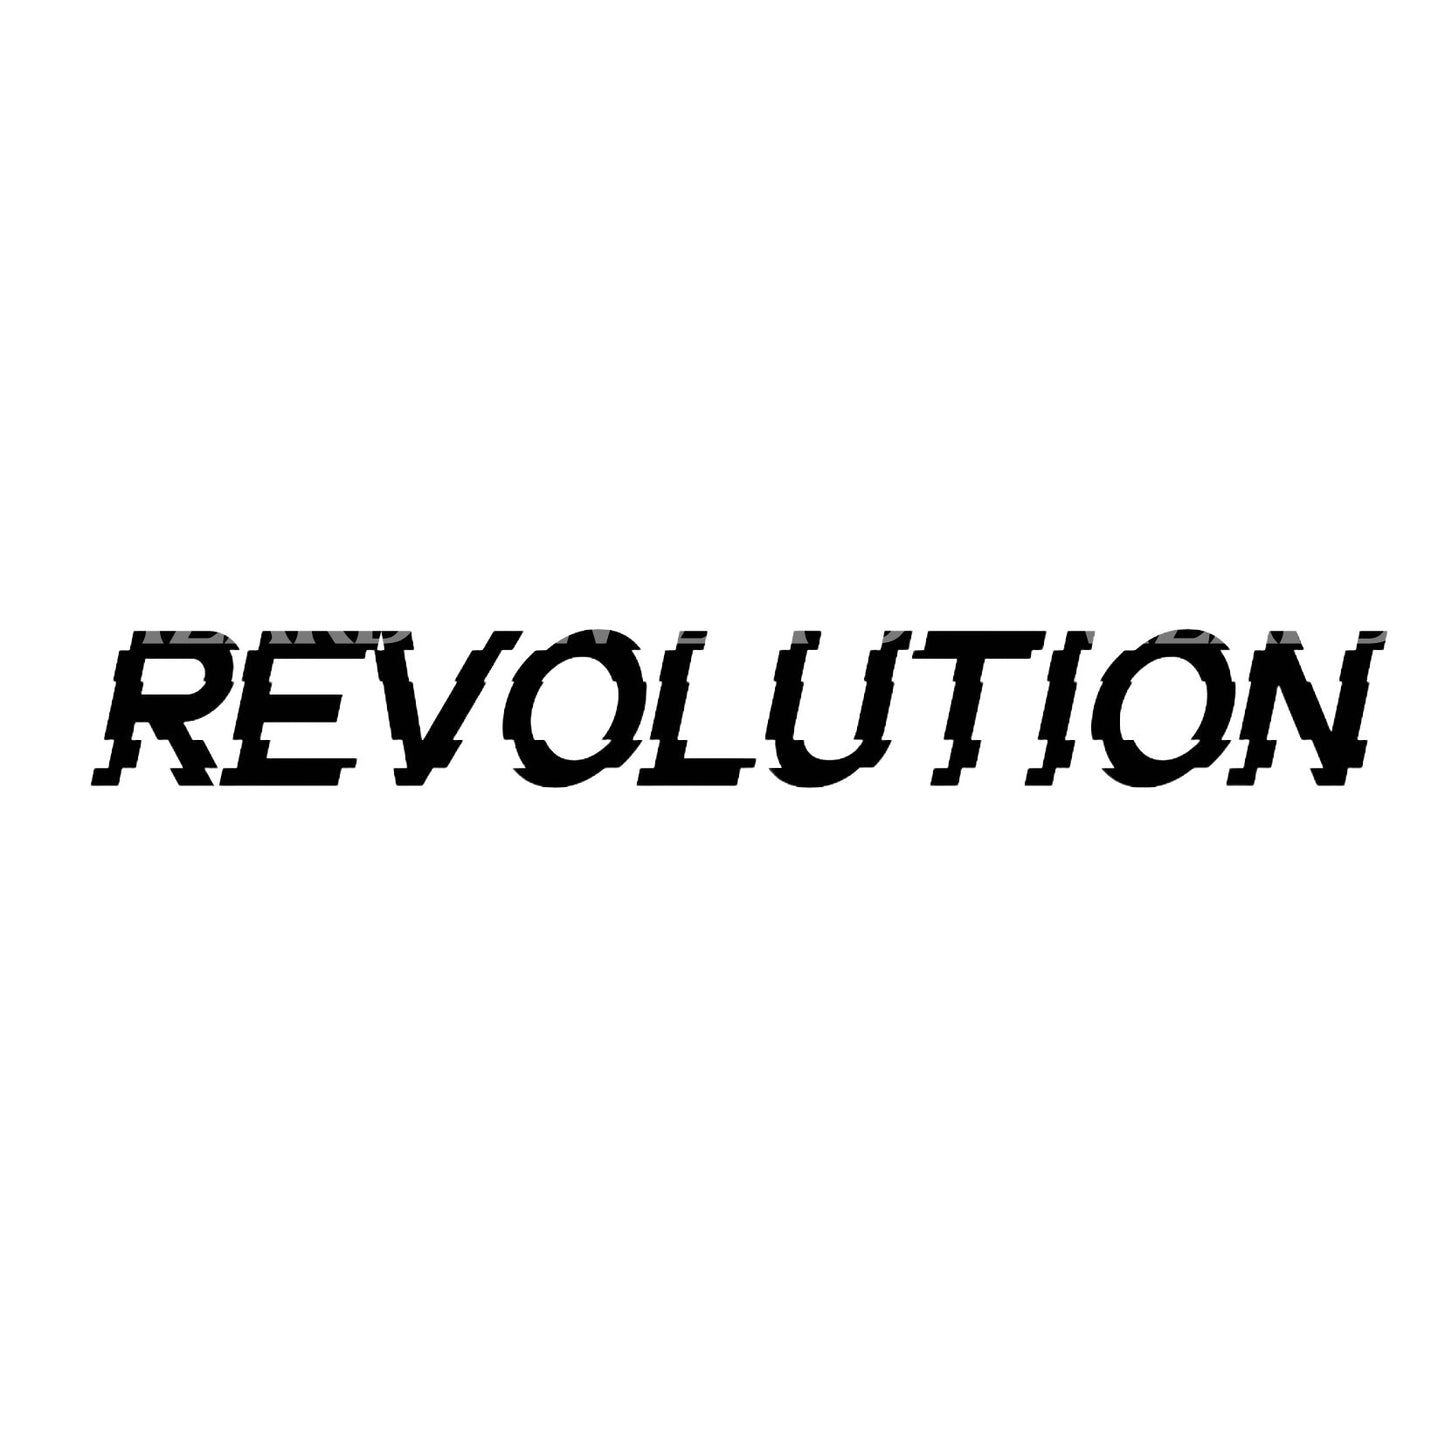 Revolution Matrix Inspired Glitch Tattoo Design